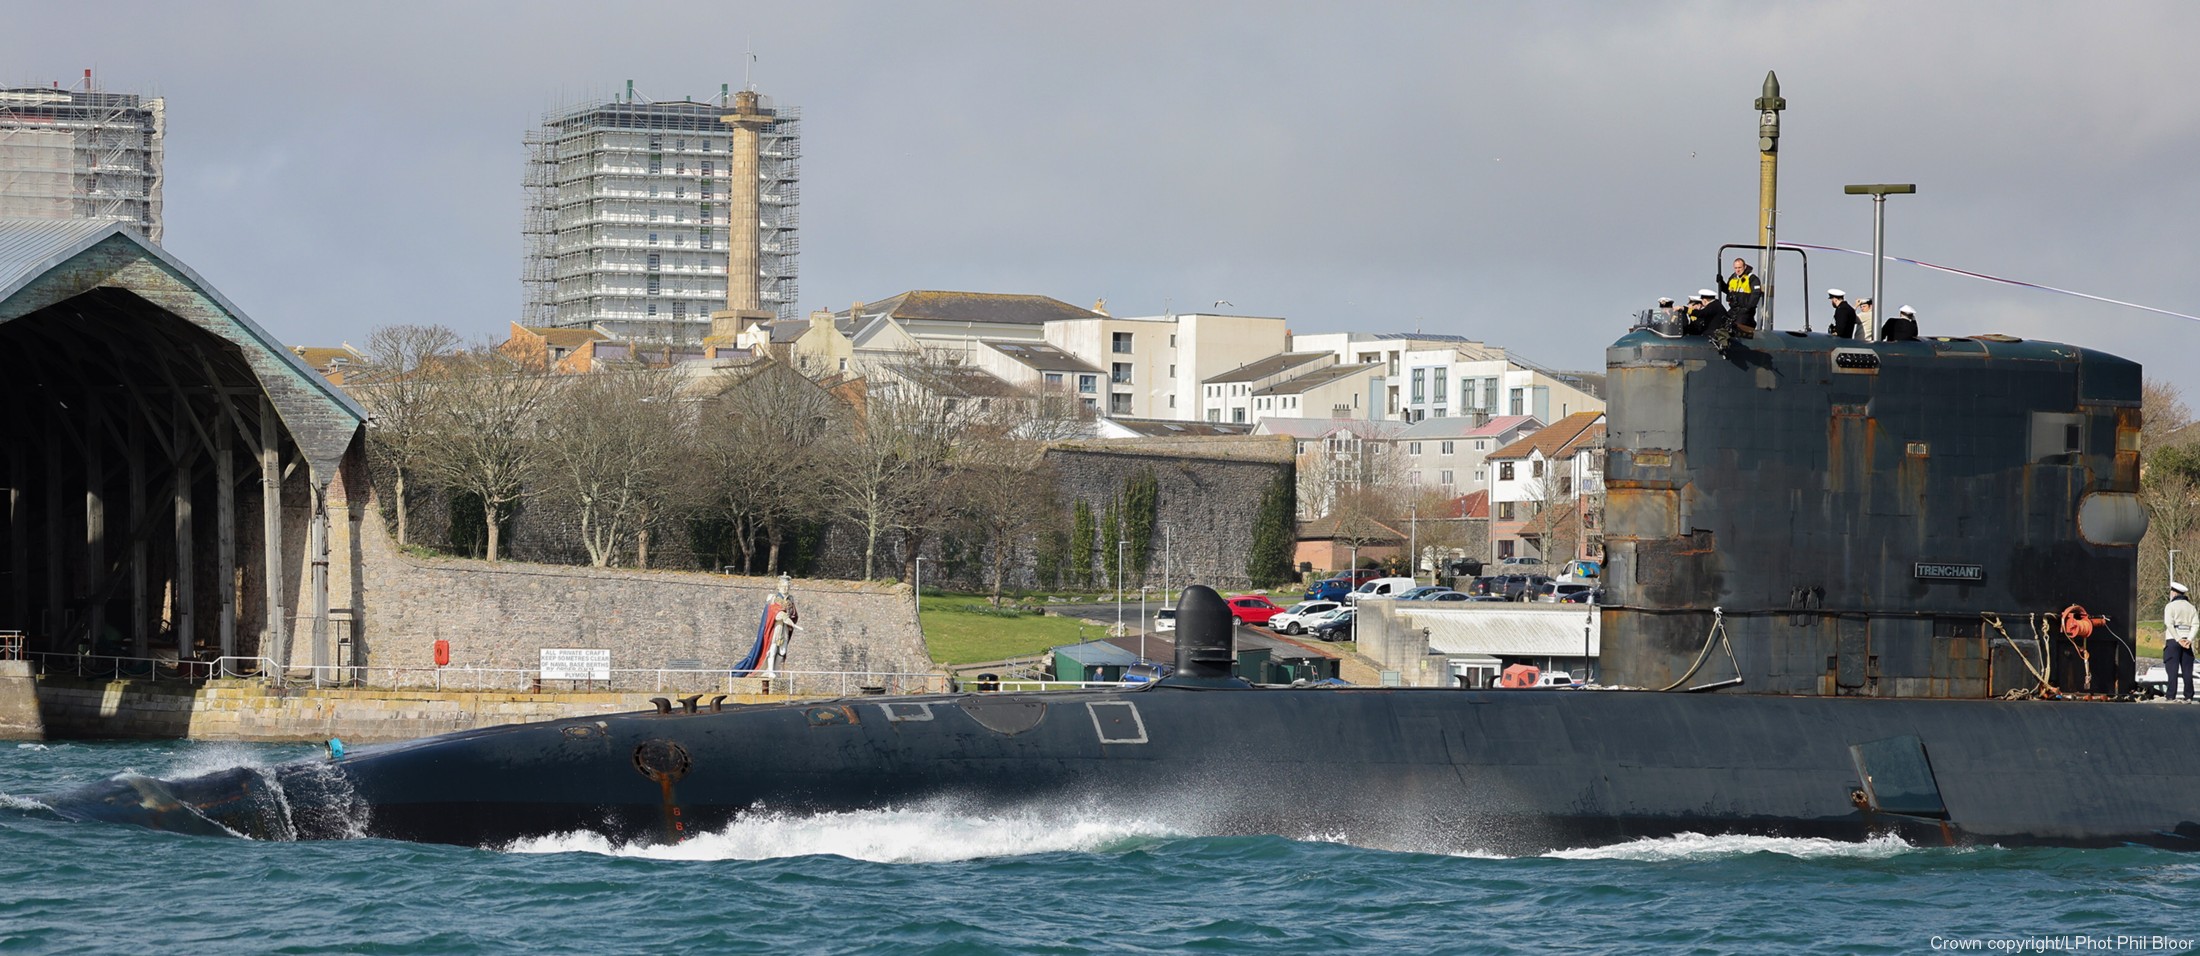 s91 hms trenchant trafalgar class attack submarine hunter killer royal navy 24